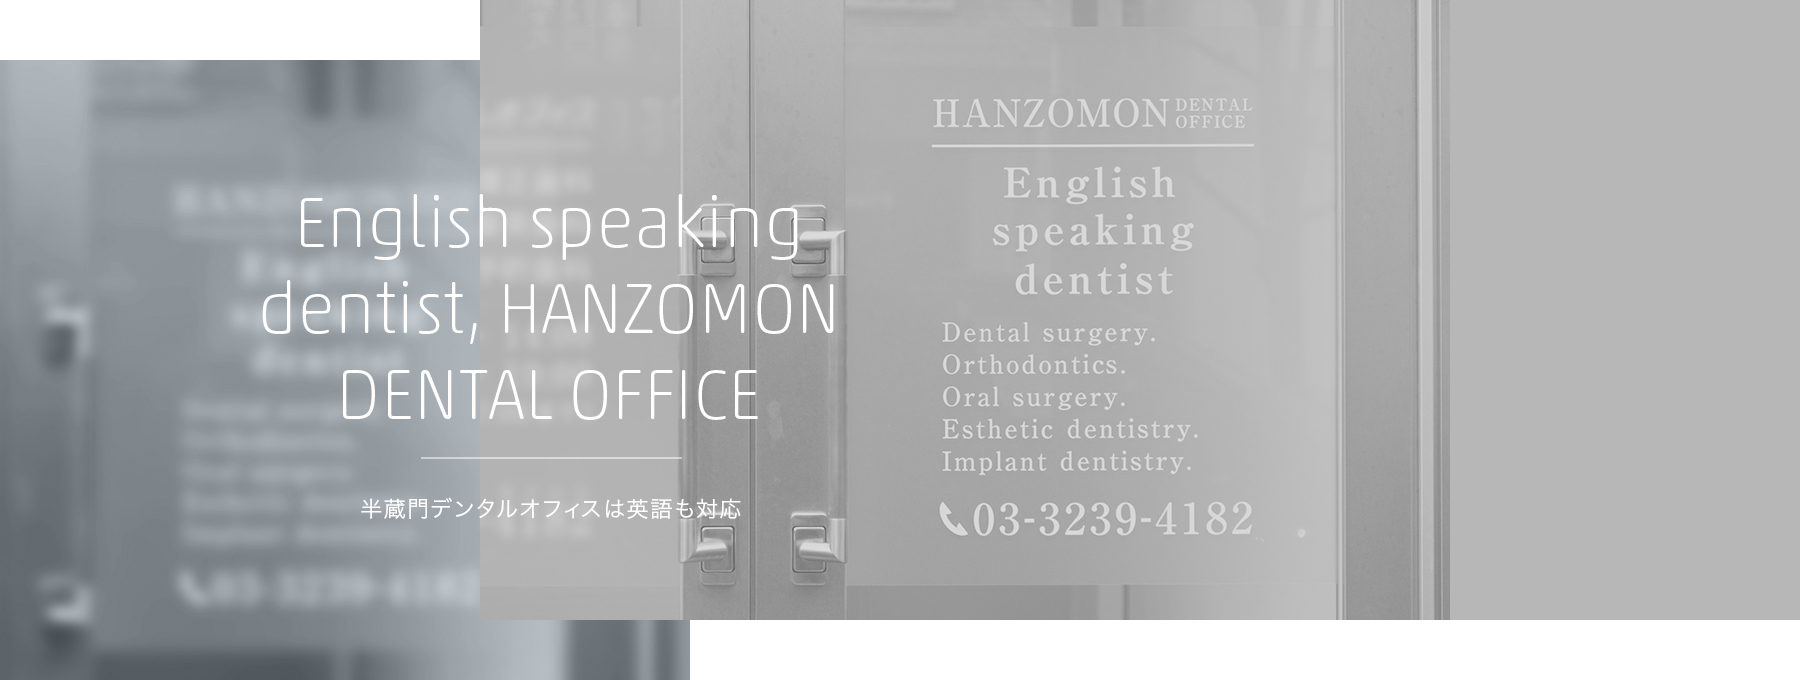 English speaking dentist,HANZOMON DENTAL OFFICE